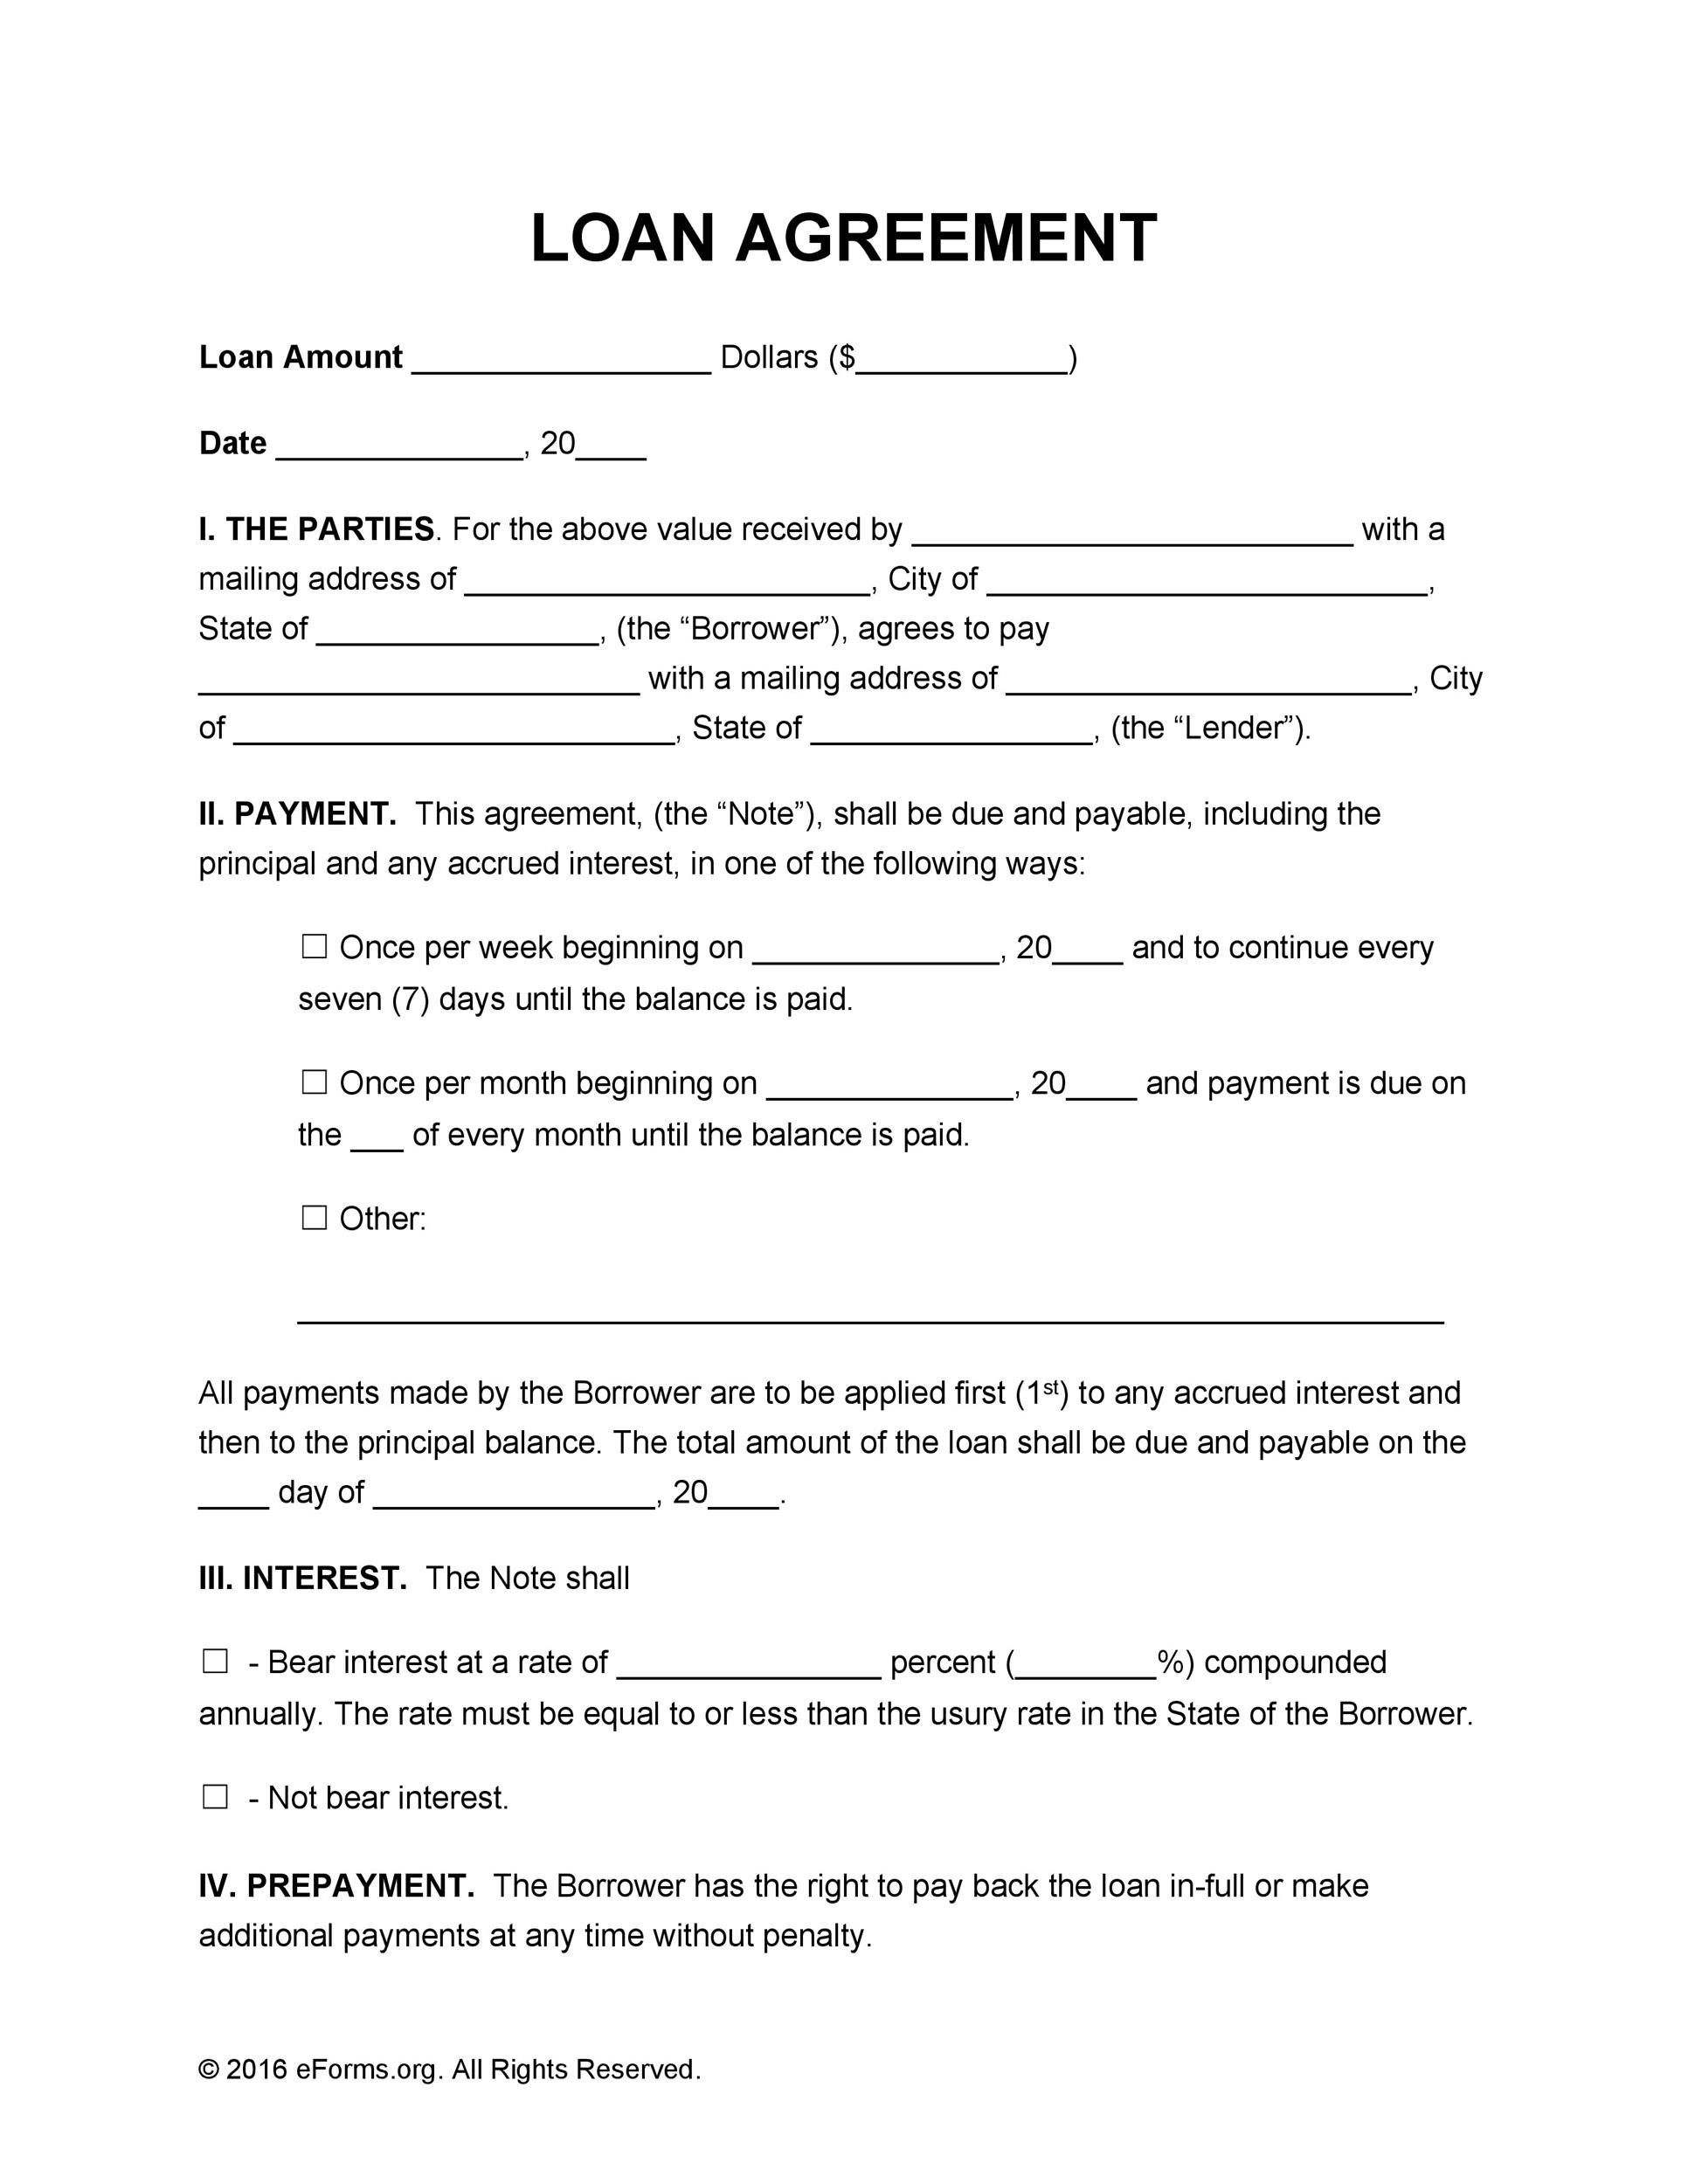 40+ Free Loan Agreement Templates [Word & PDF] á… TemplateLab